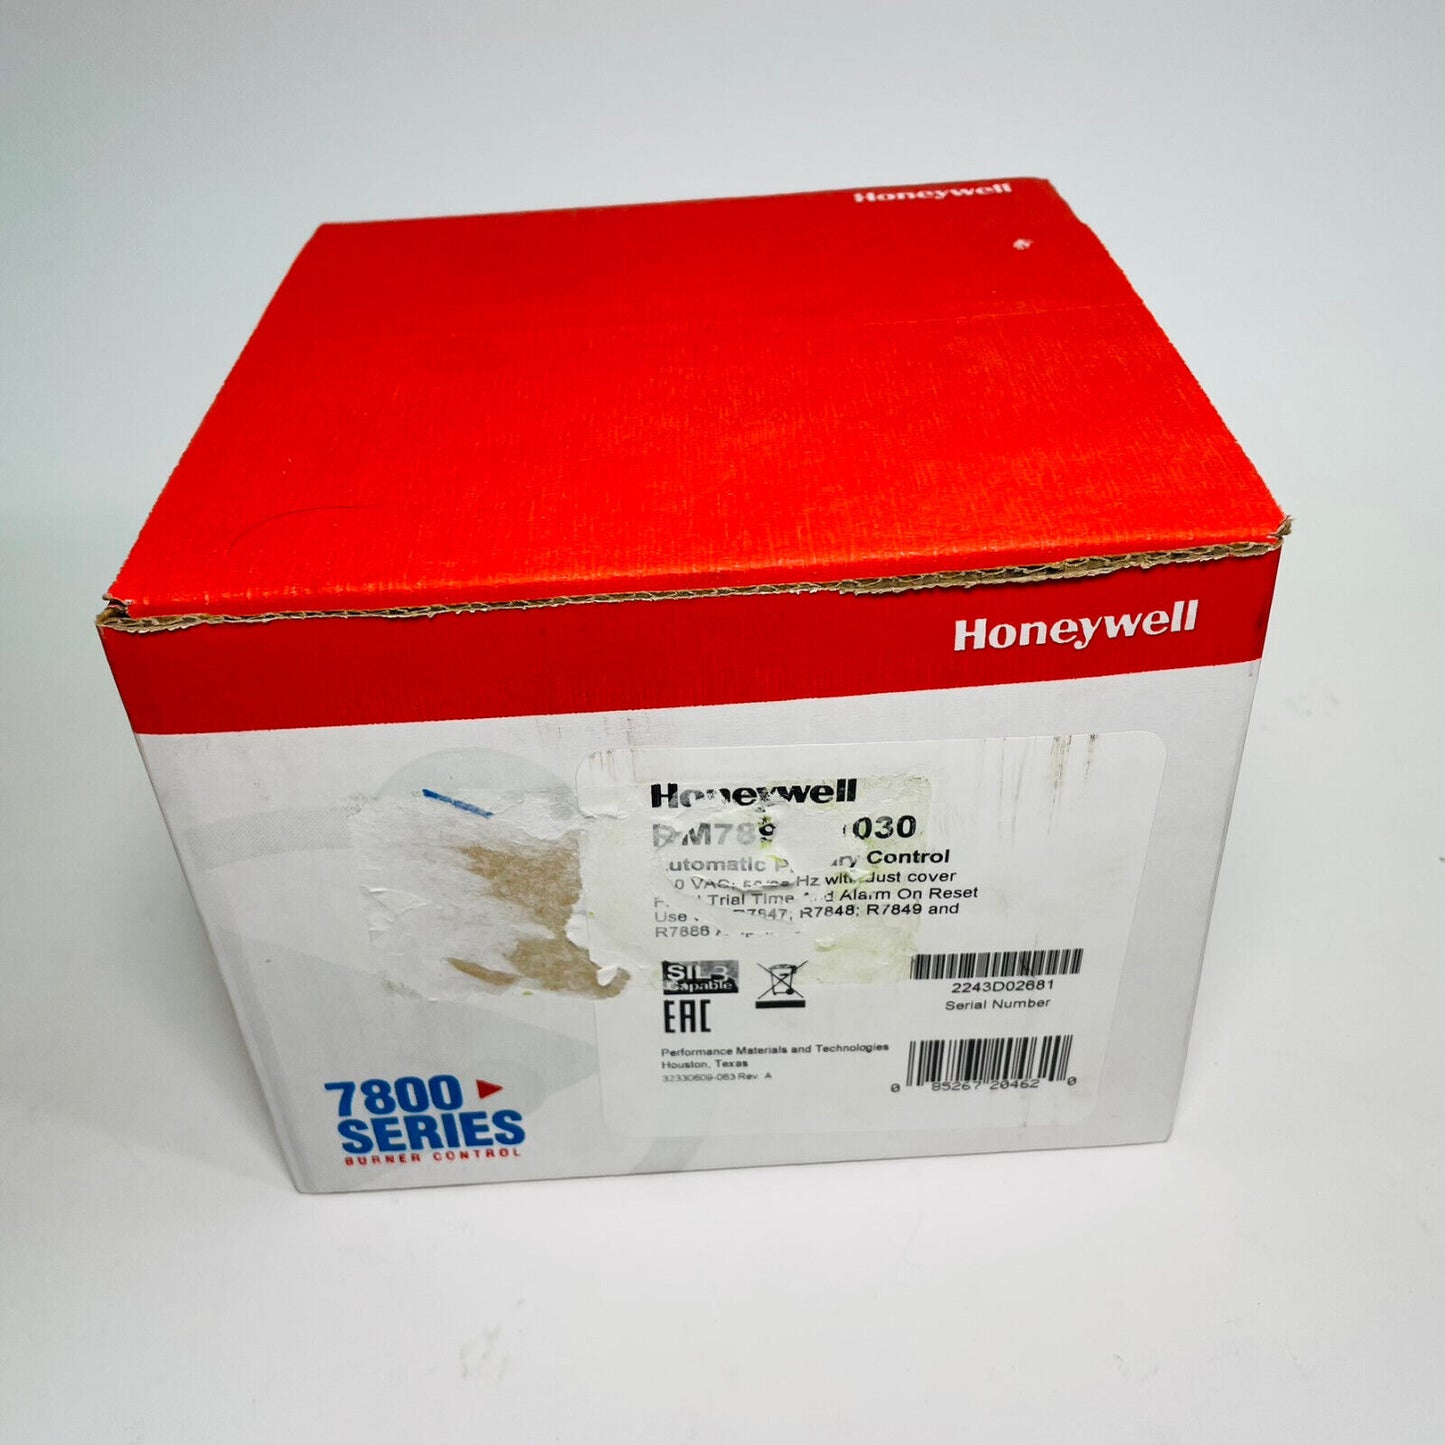 New Honeywell RM7890 B 1030 / RM7890B1030 Burner Control